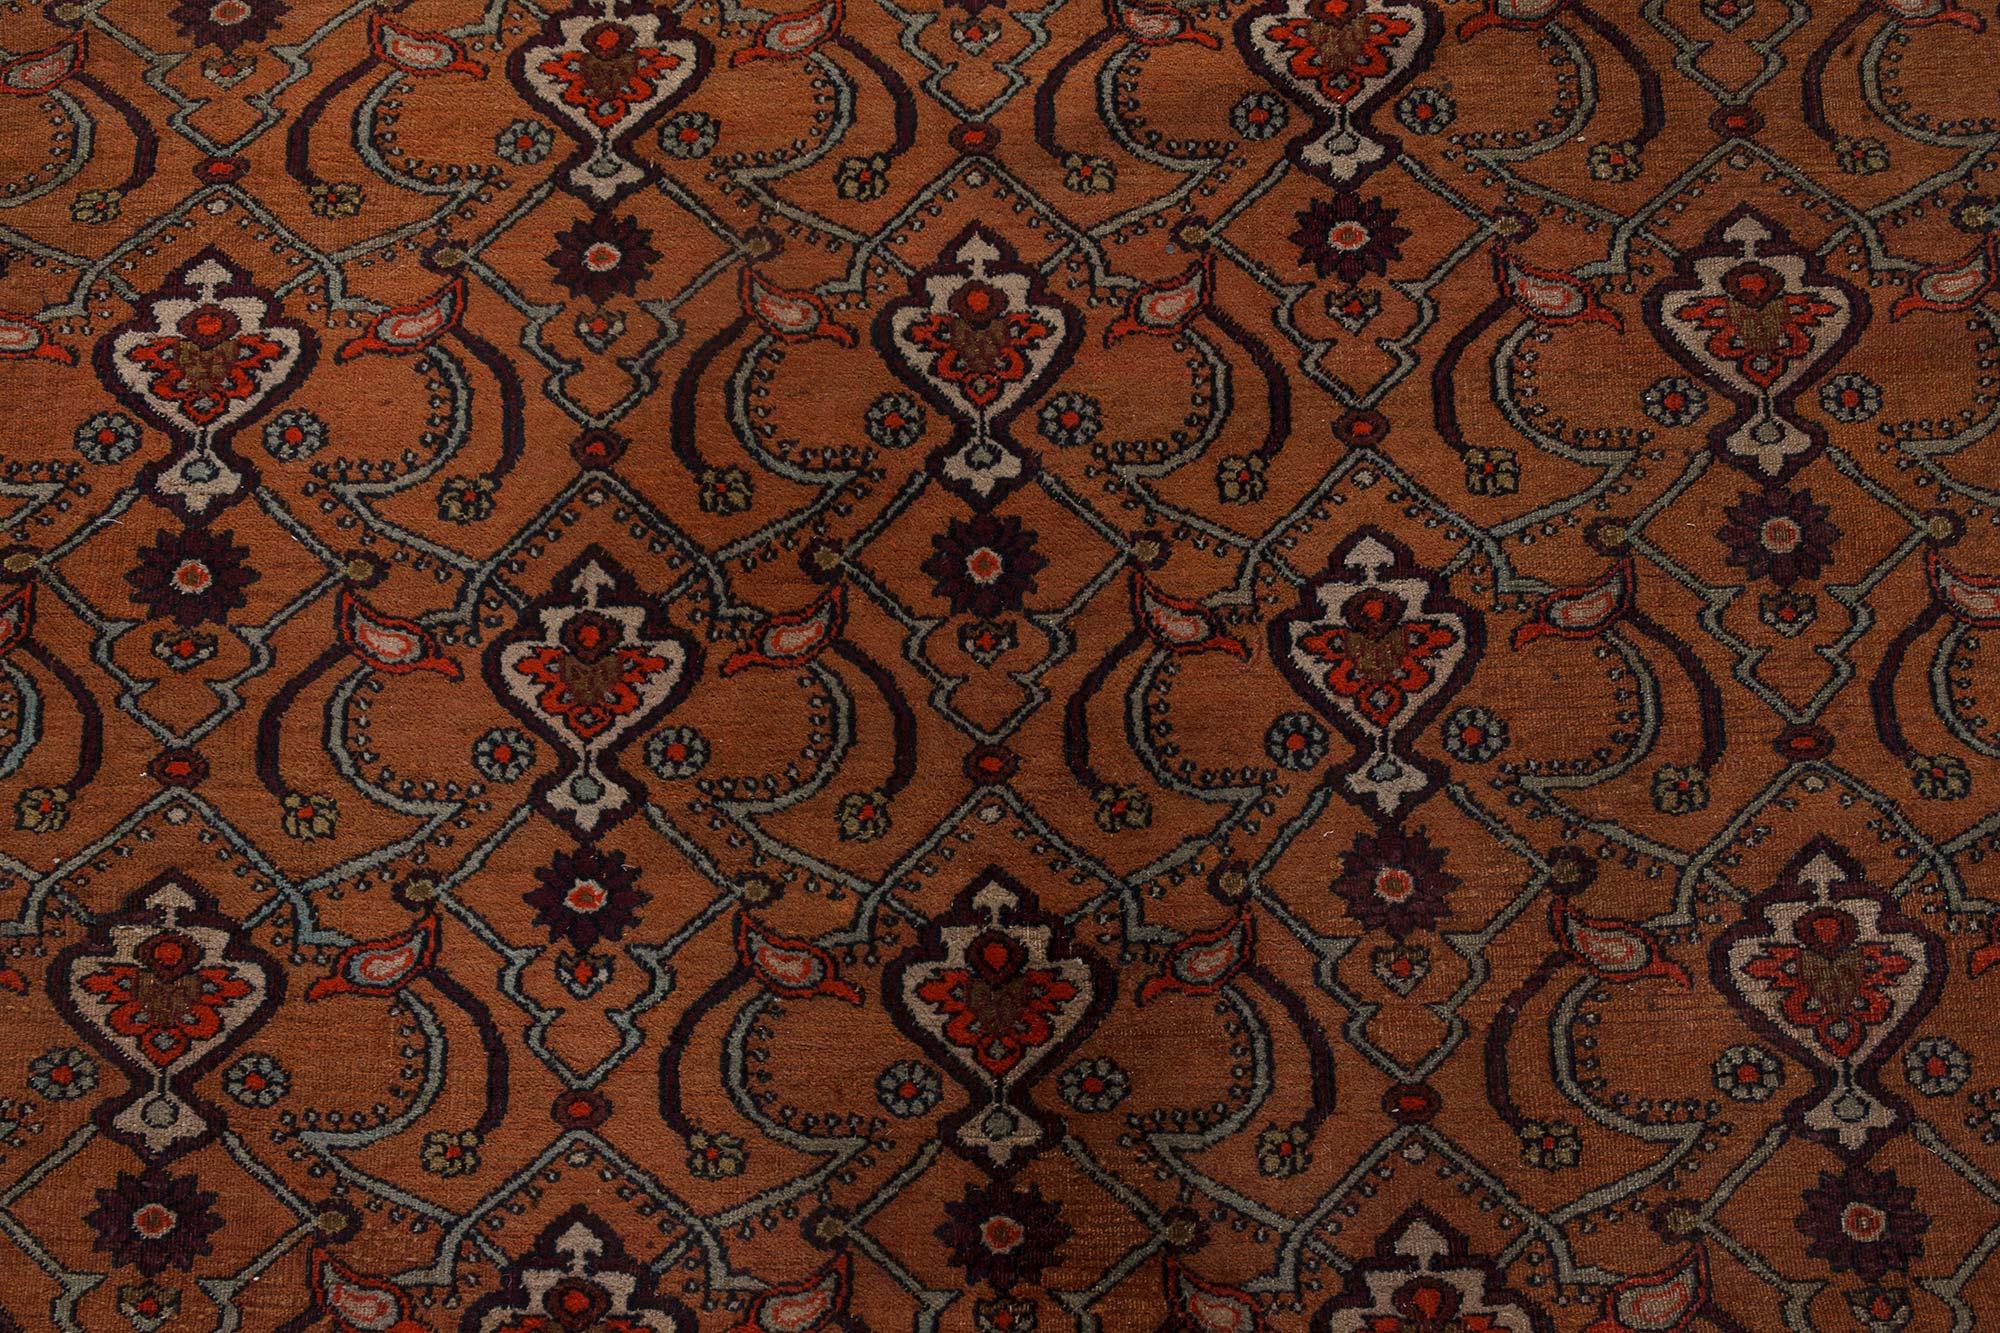 Mid-20th century Persian Meshad handmade wool rug
Size: 15'0